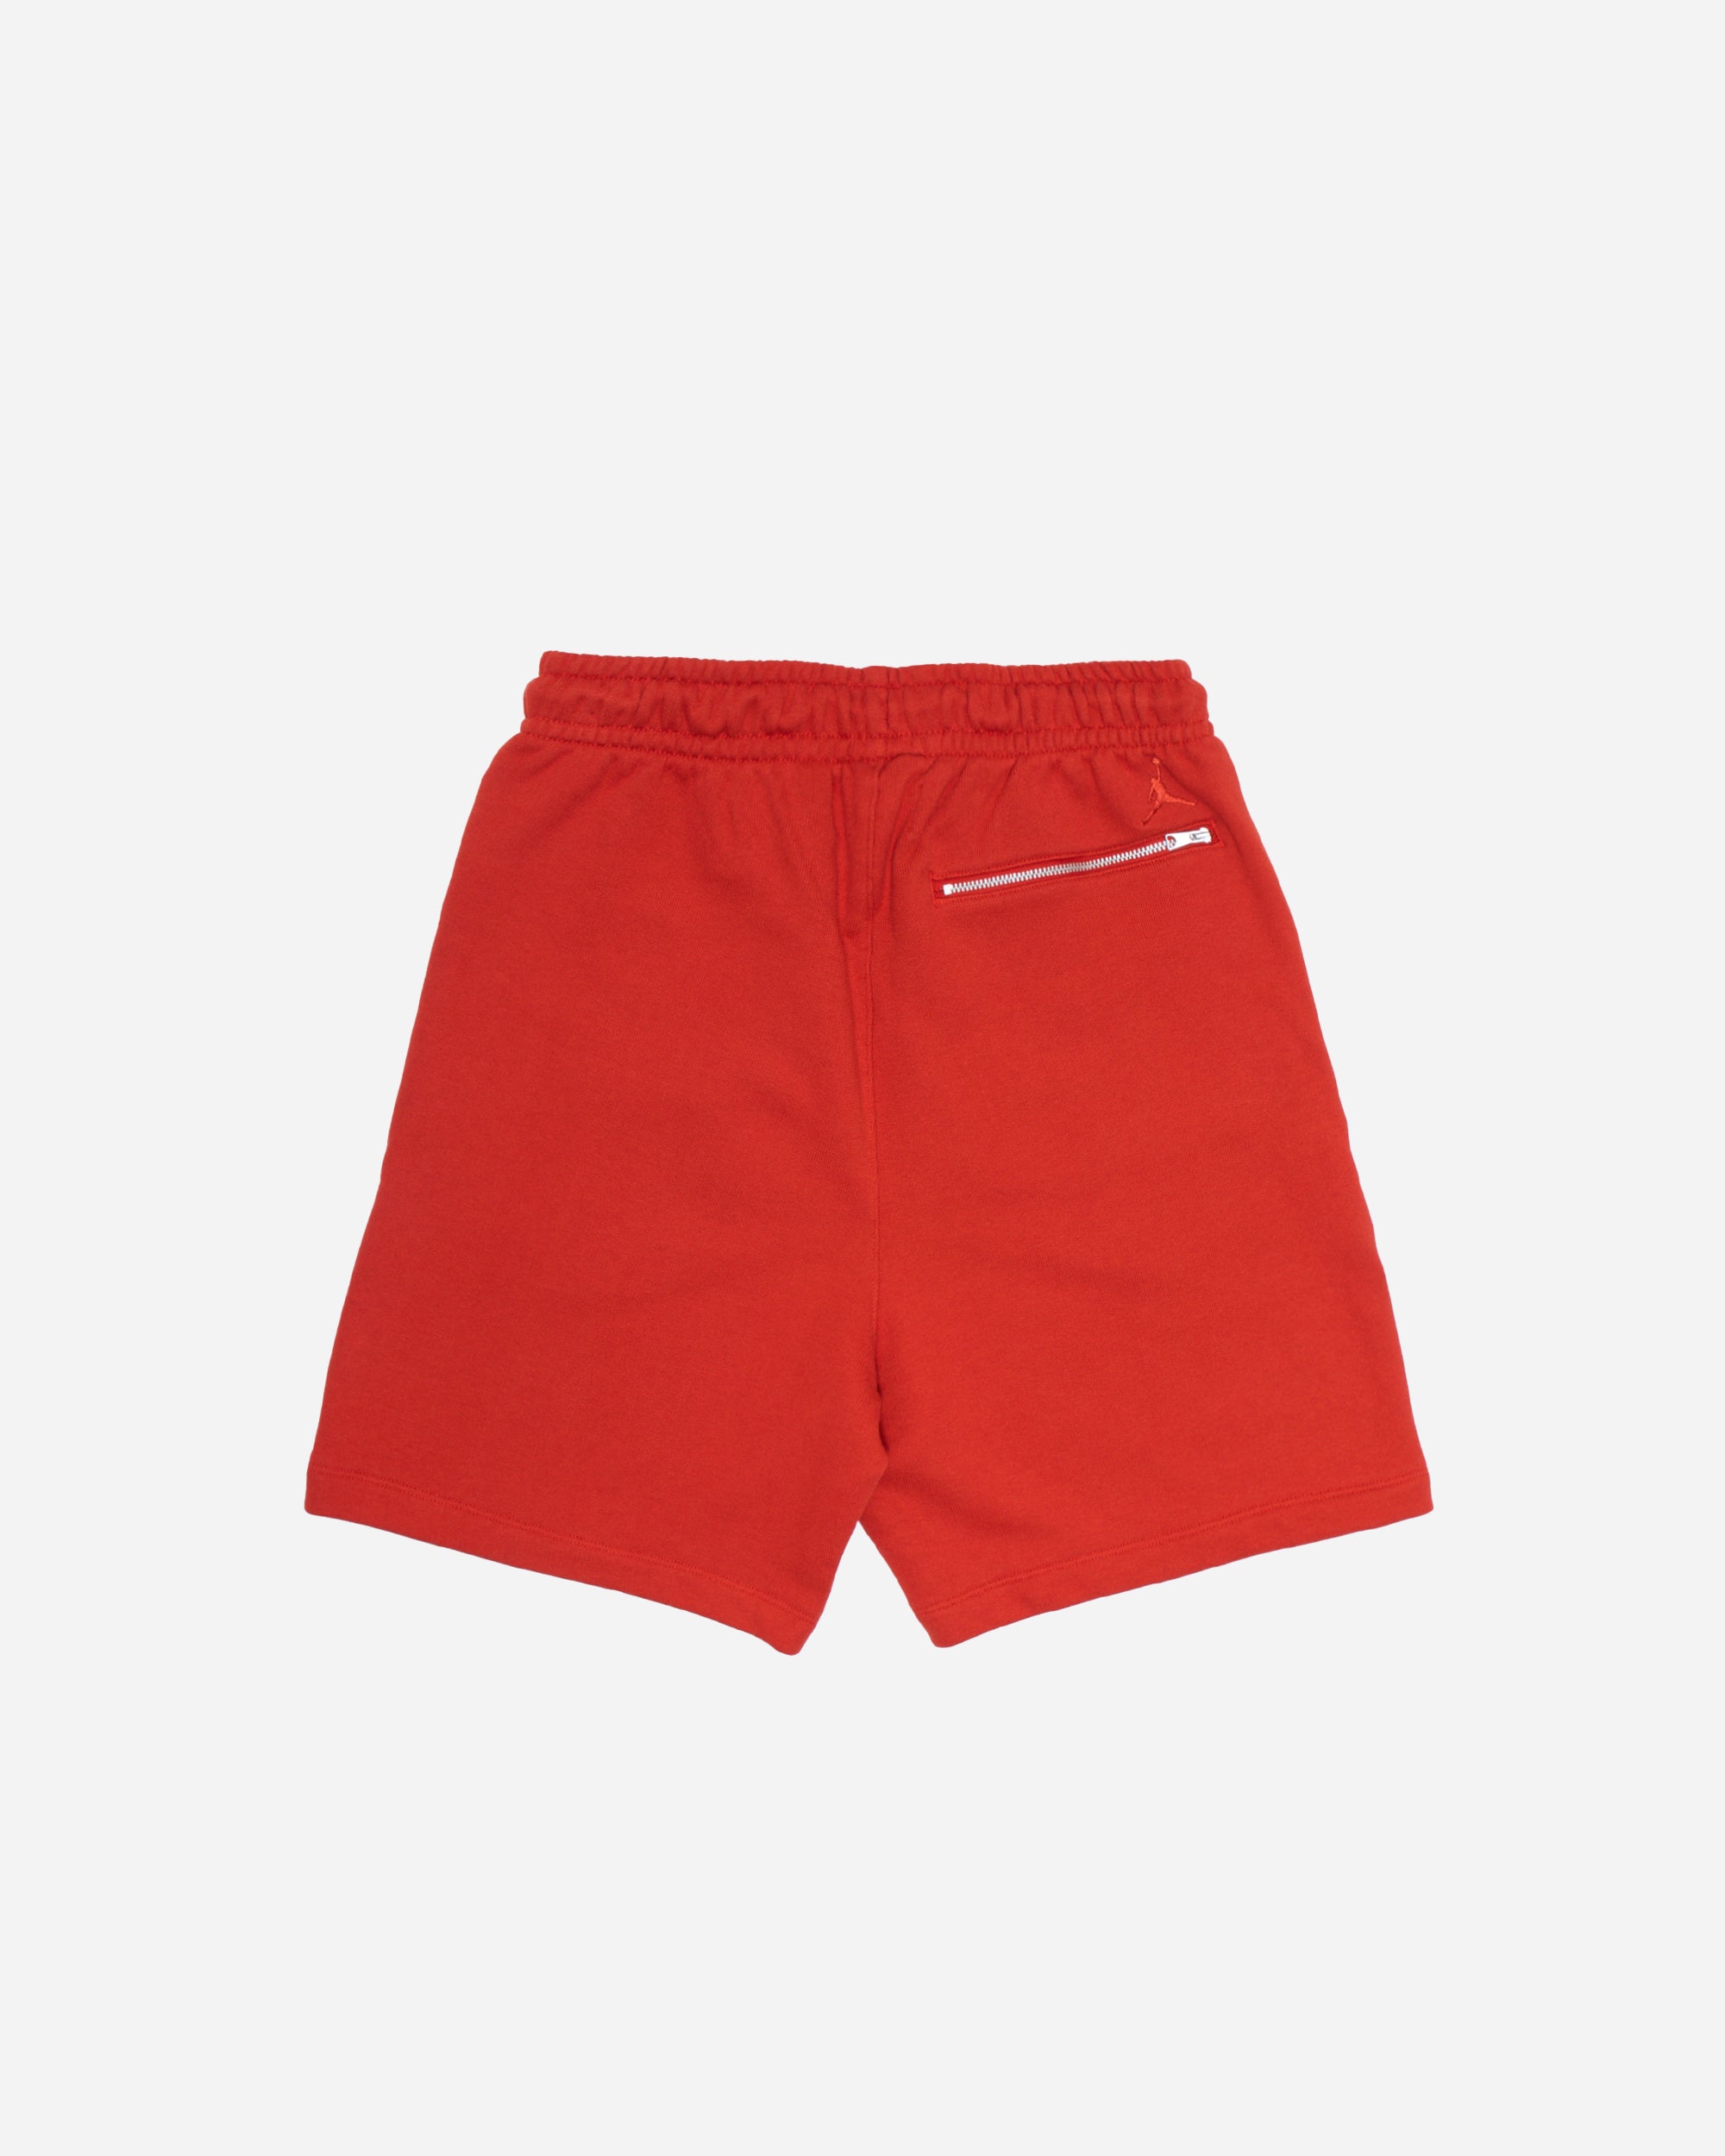 Jordan Brand Air Jordan Fleece Shorts MYSTIC RED FJ0700-622